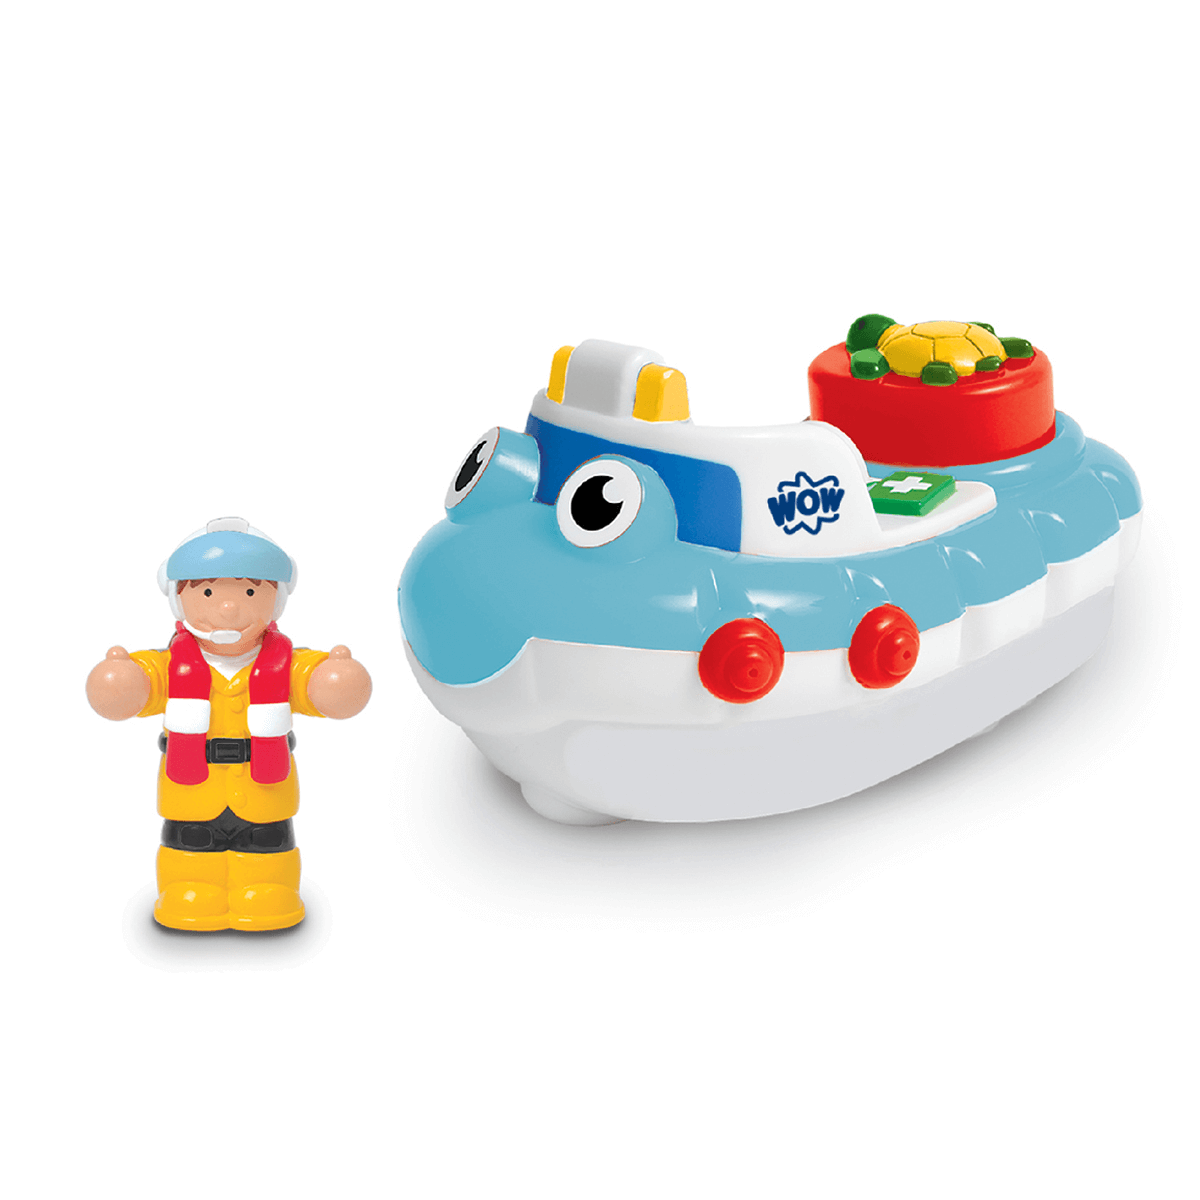 WOW Toys Bath Fun Playset